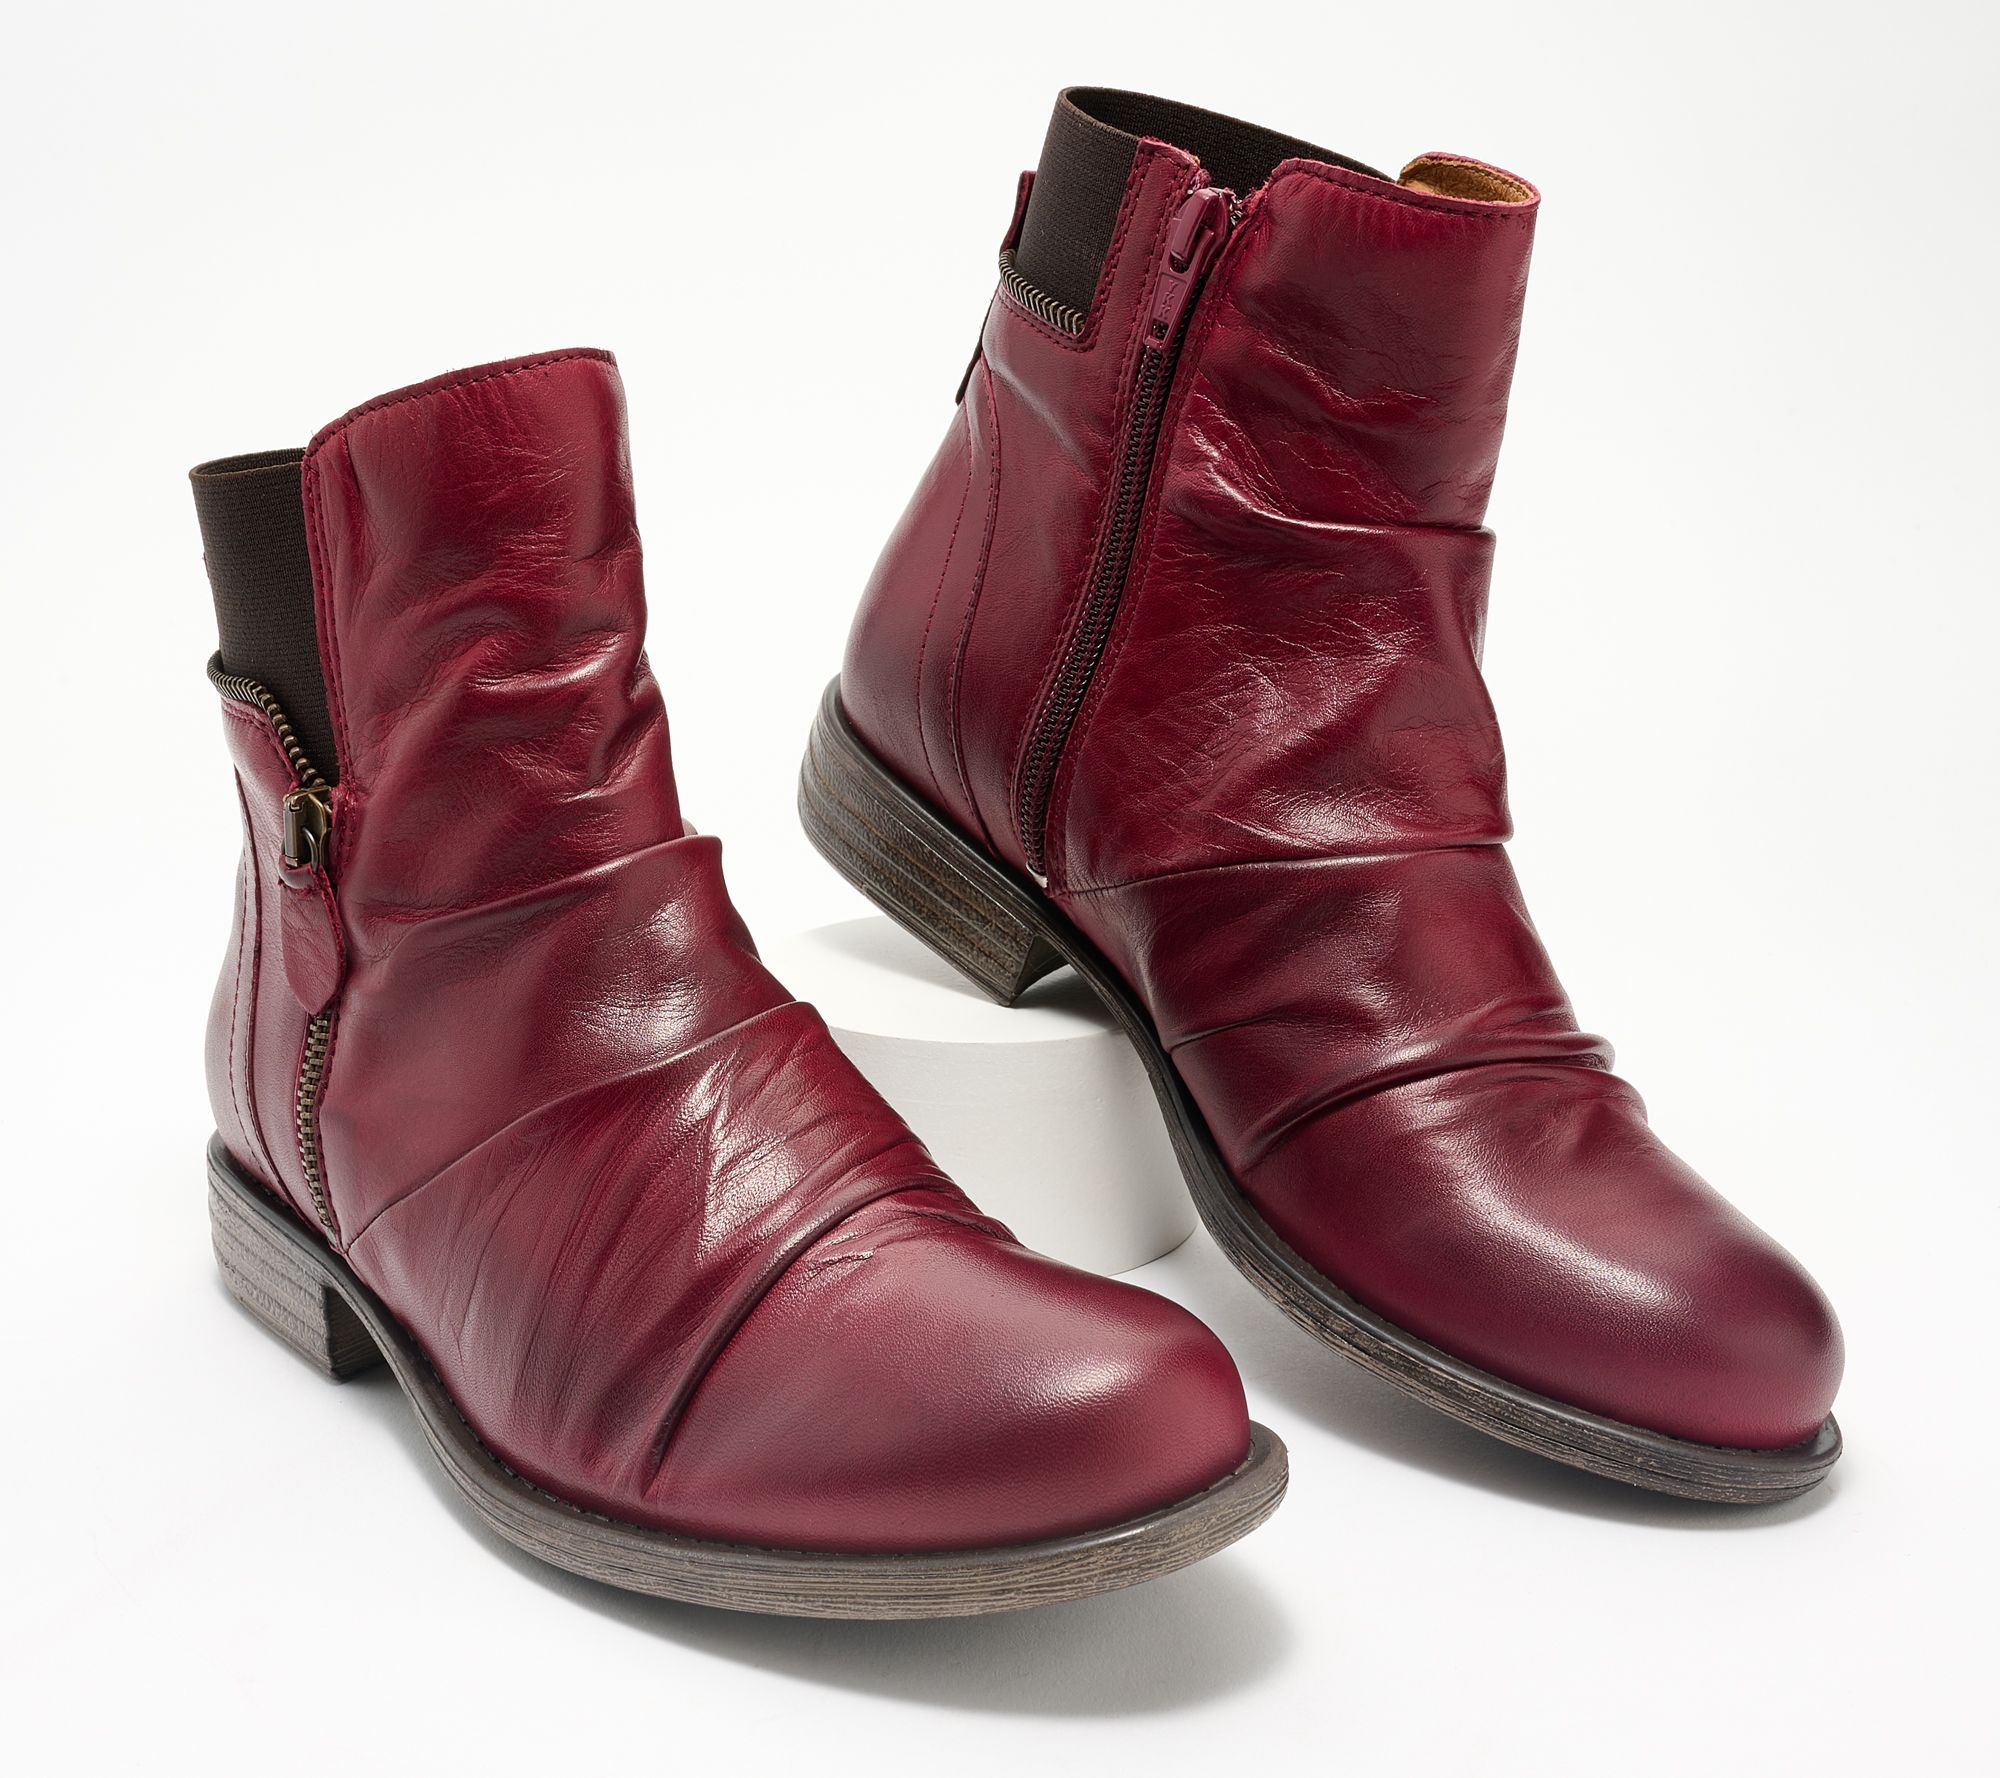 Miz Mooz Leather Wide Width Ankle Boots - Laney, Size EU36W(5.5-6W), Bordeaux